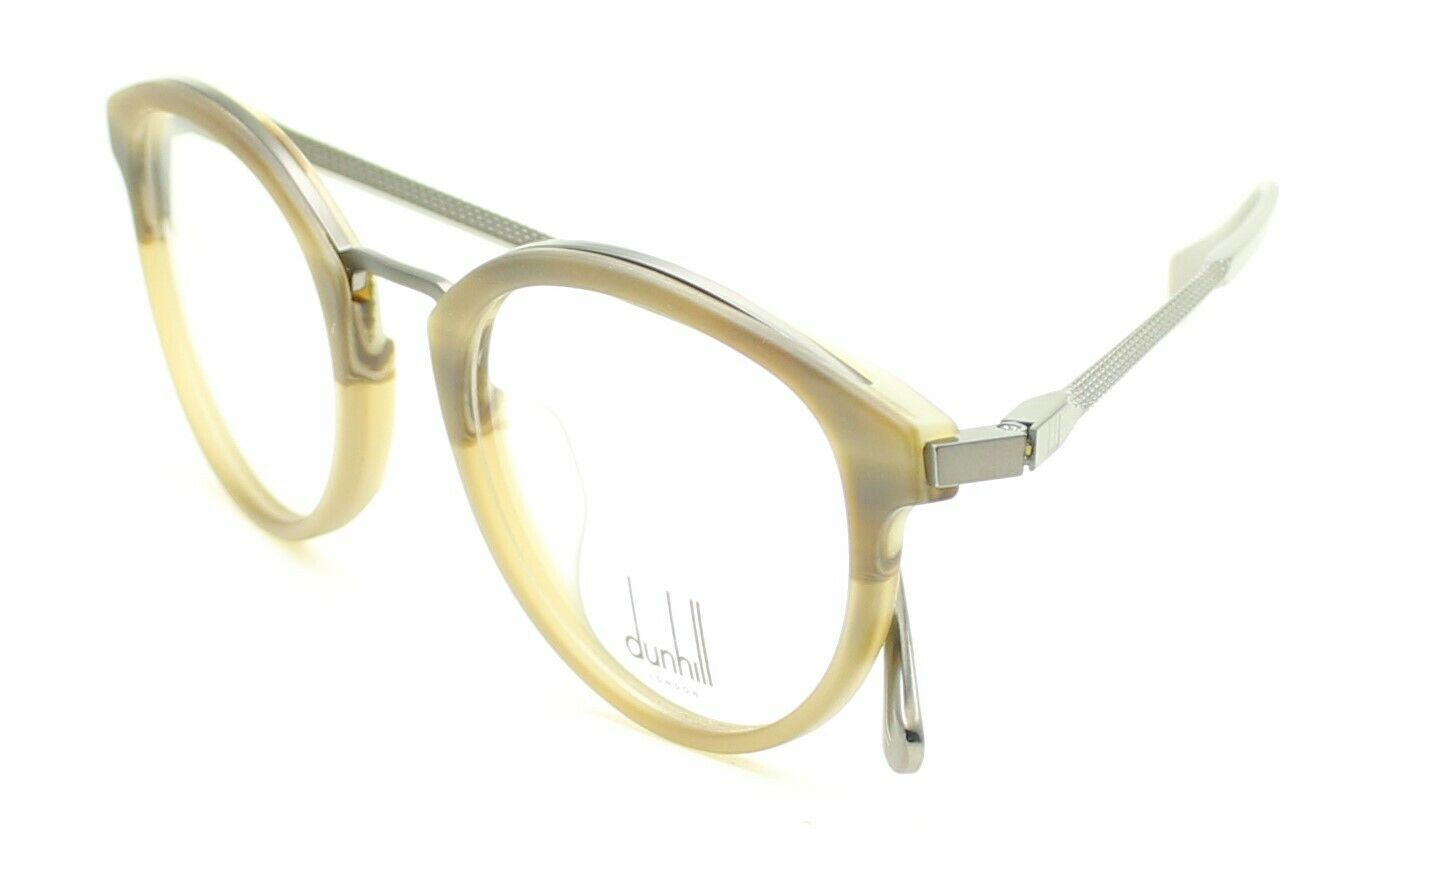 DUNHILL LONDON VDH 084 9R4M Eyewear FRAMES RX Optical Eyeglasses Glasses - Italy